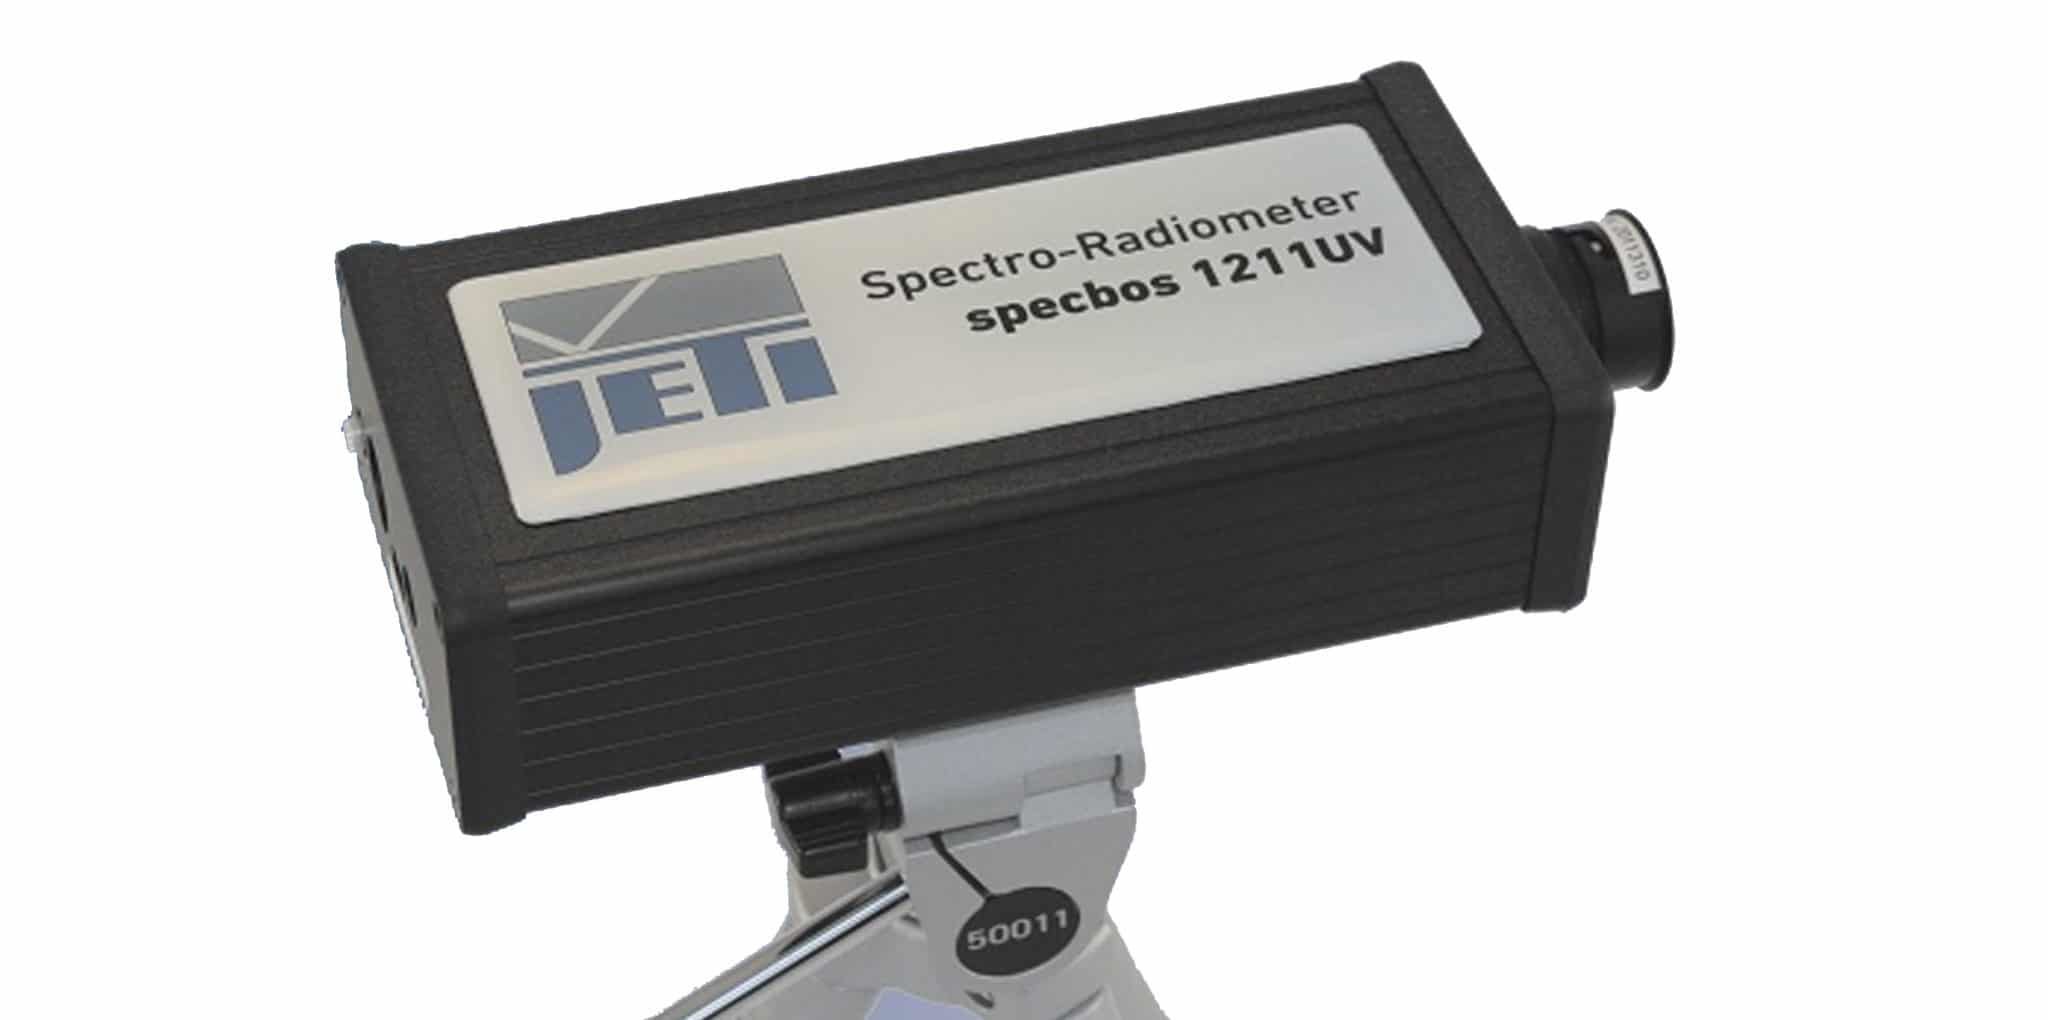 Spectroradiomètre haute sensibilité - Specbos 1211 UV_0